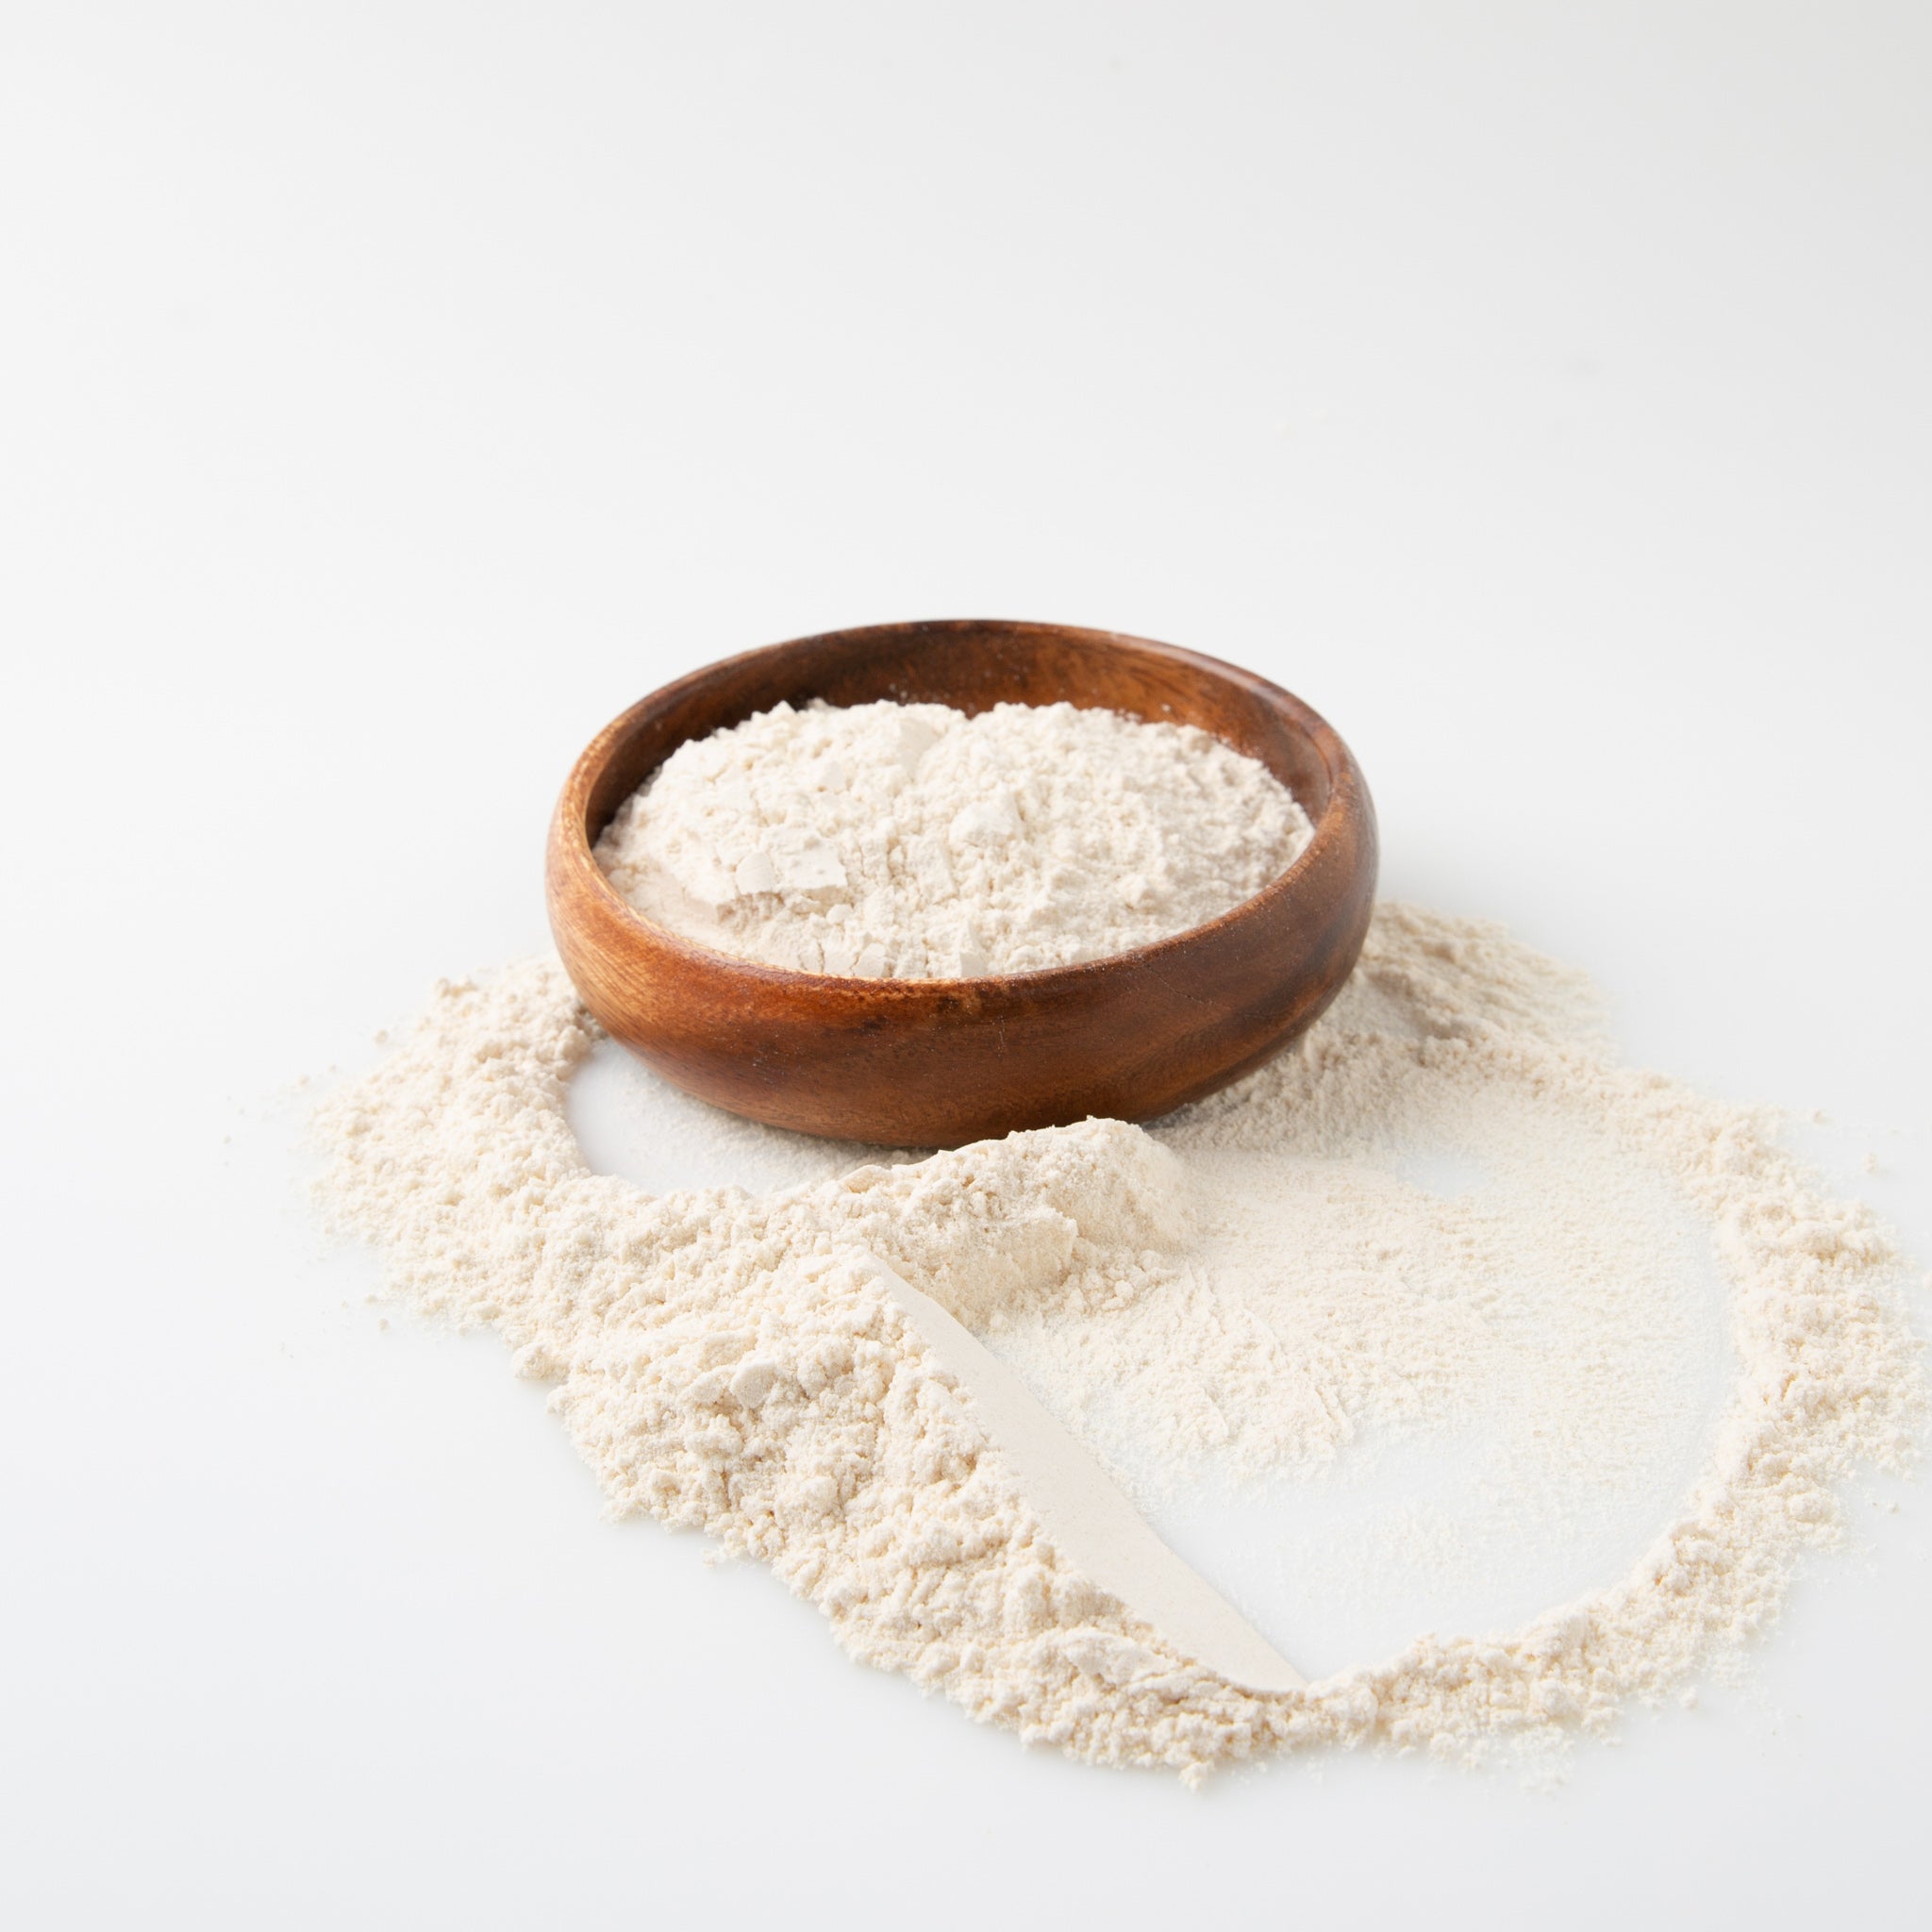 Organic White Bakers Flour (Flour) Image 3 - Naked Foods